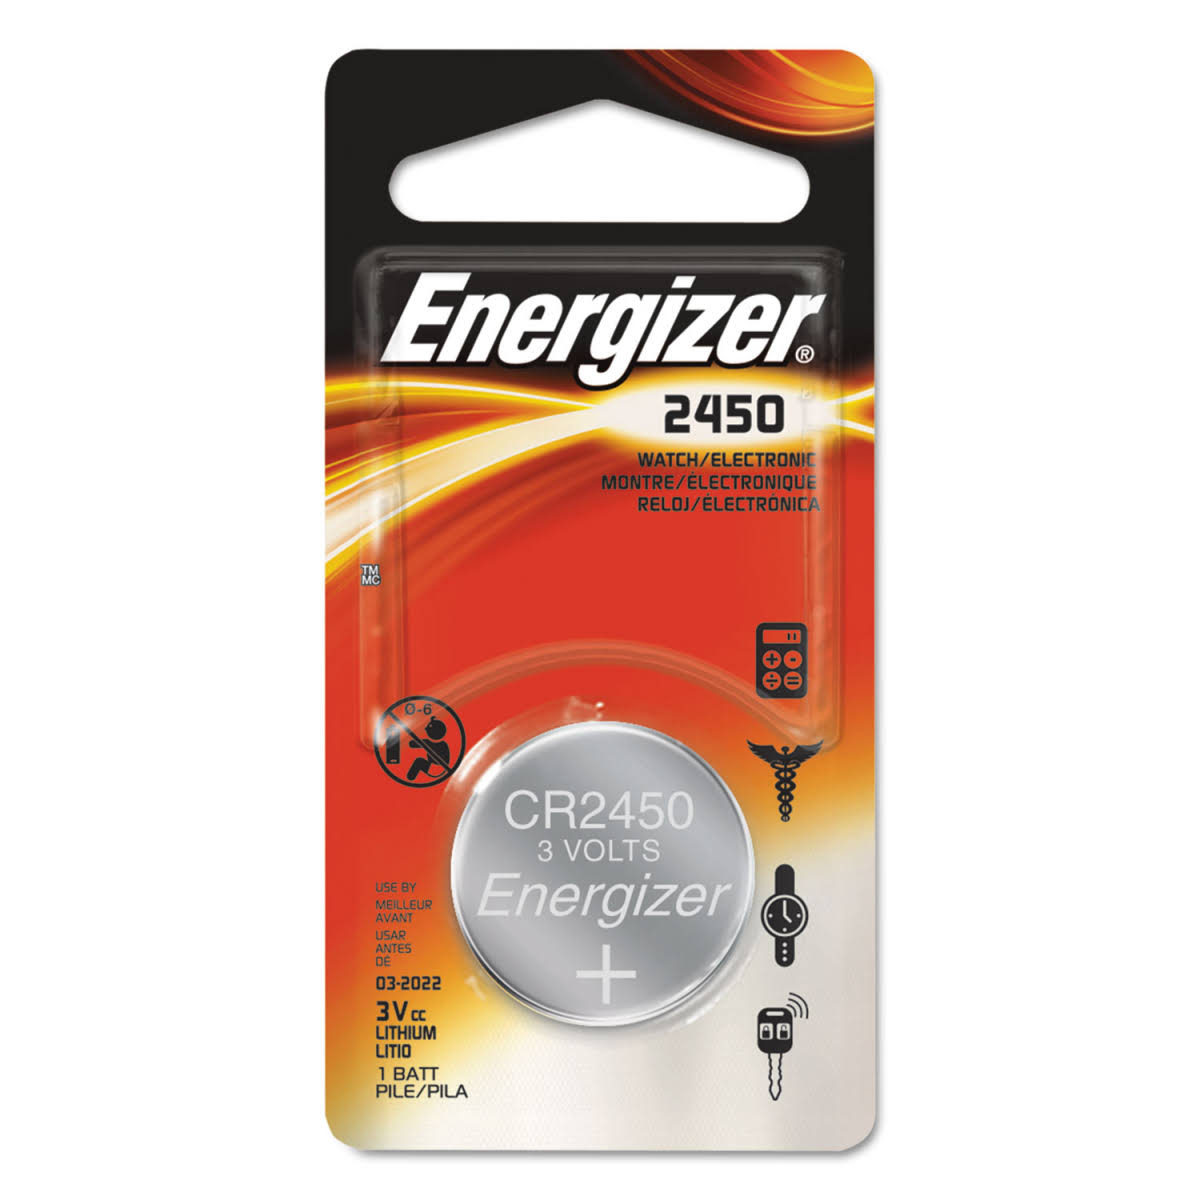 Energizer 2450 Lithium Battery - 3V